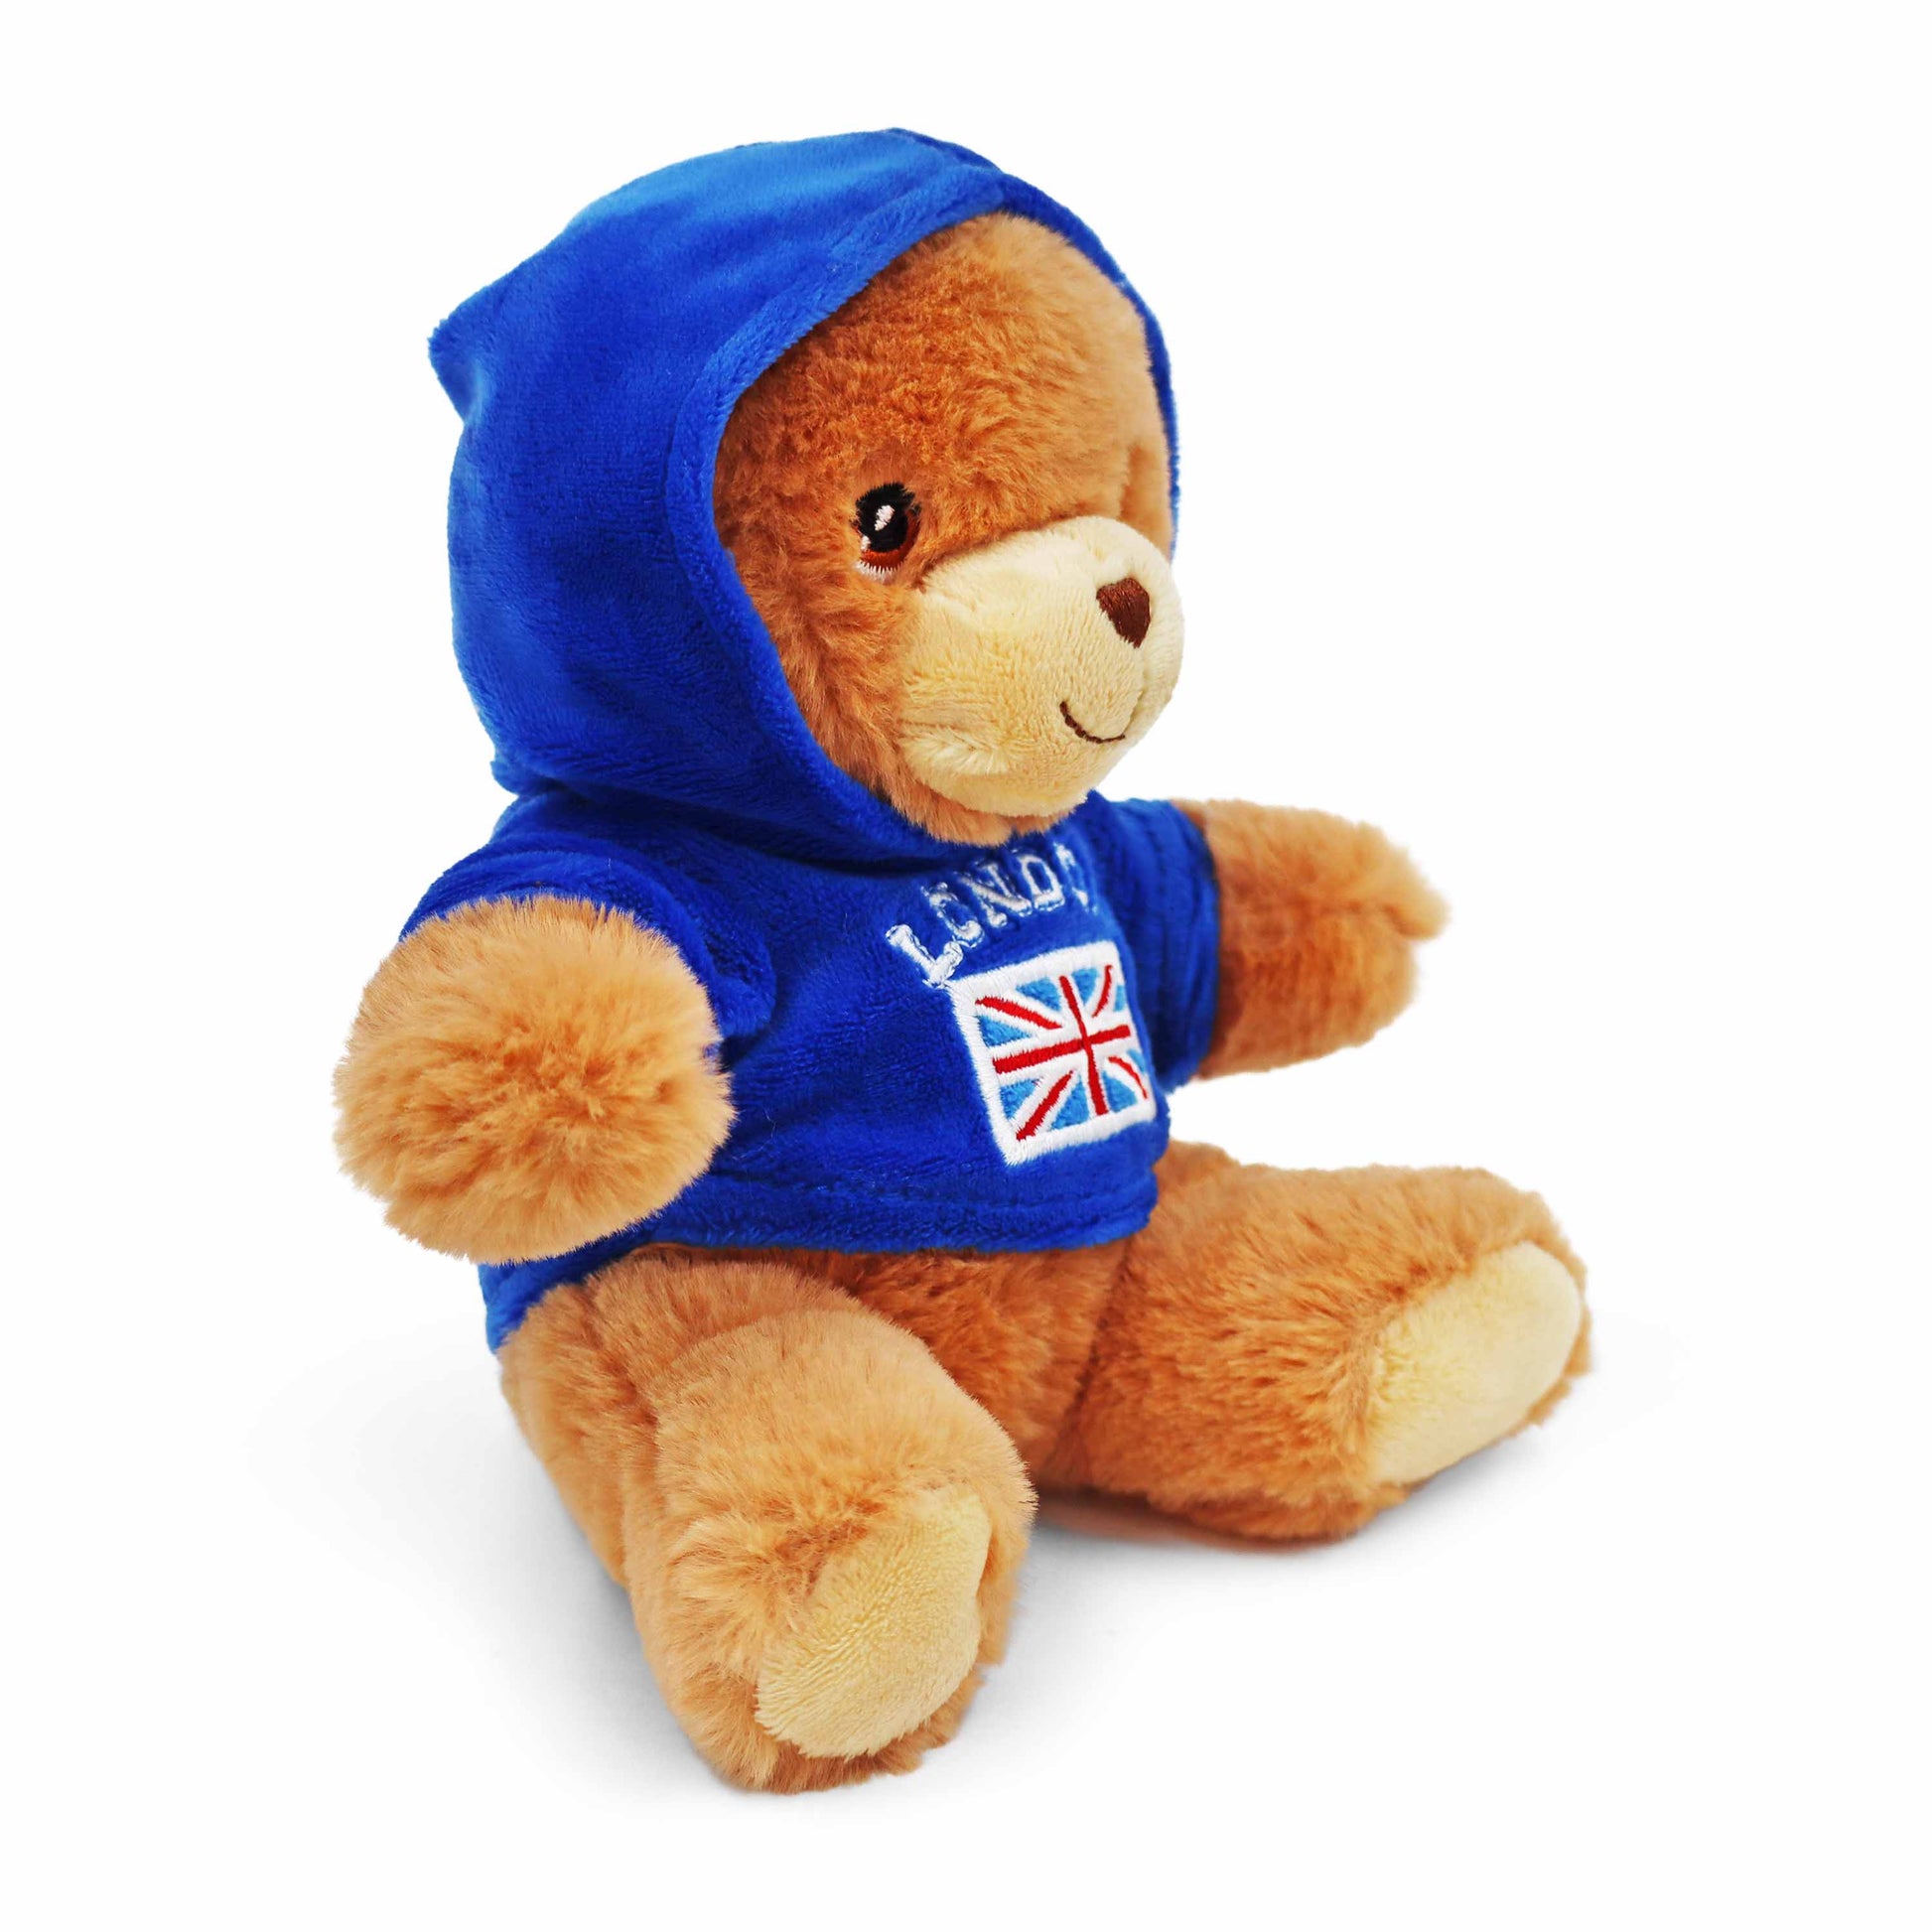 London Union Jack Teddy Bear - Blue Hoodie - London Souvenir Teddy Bear